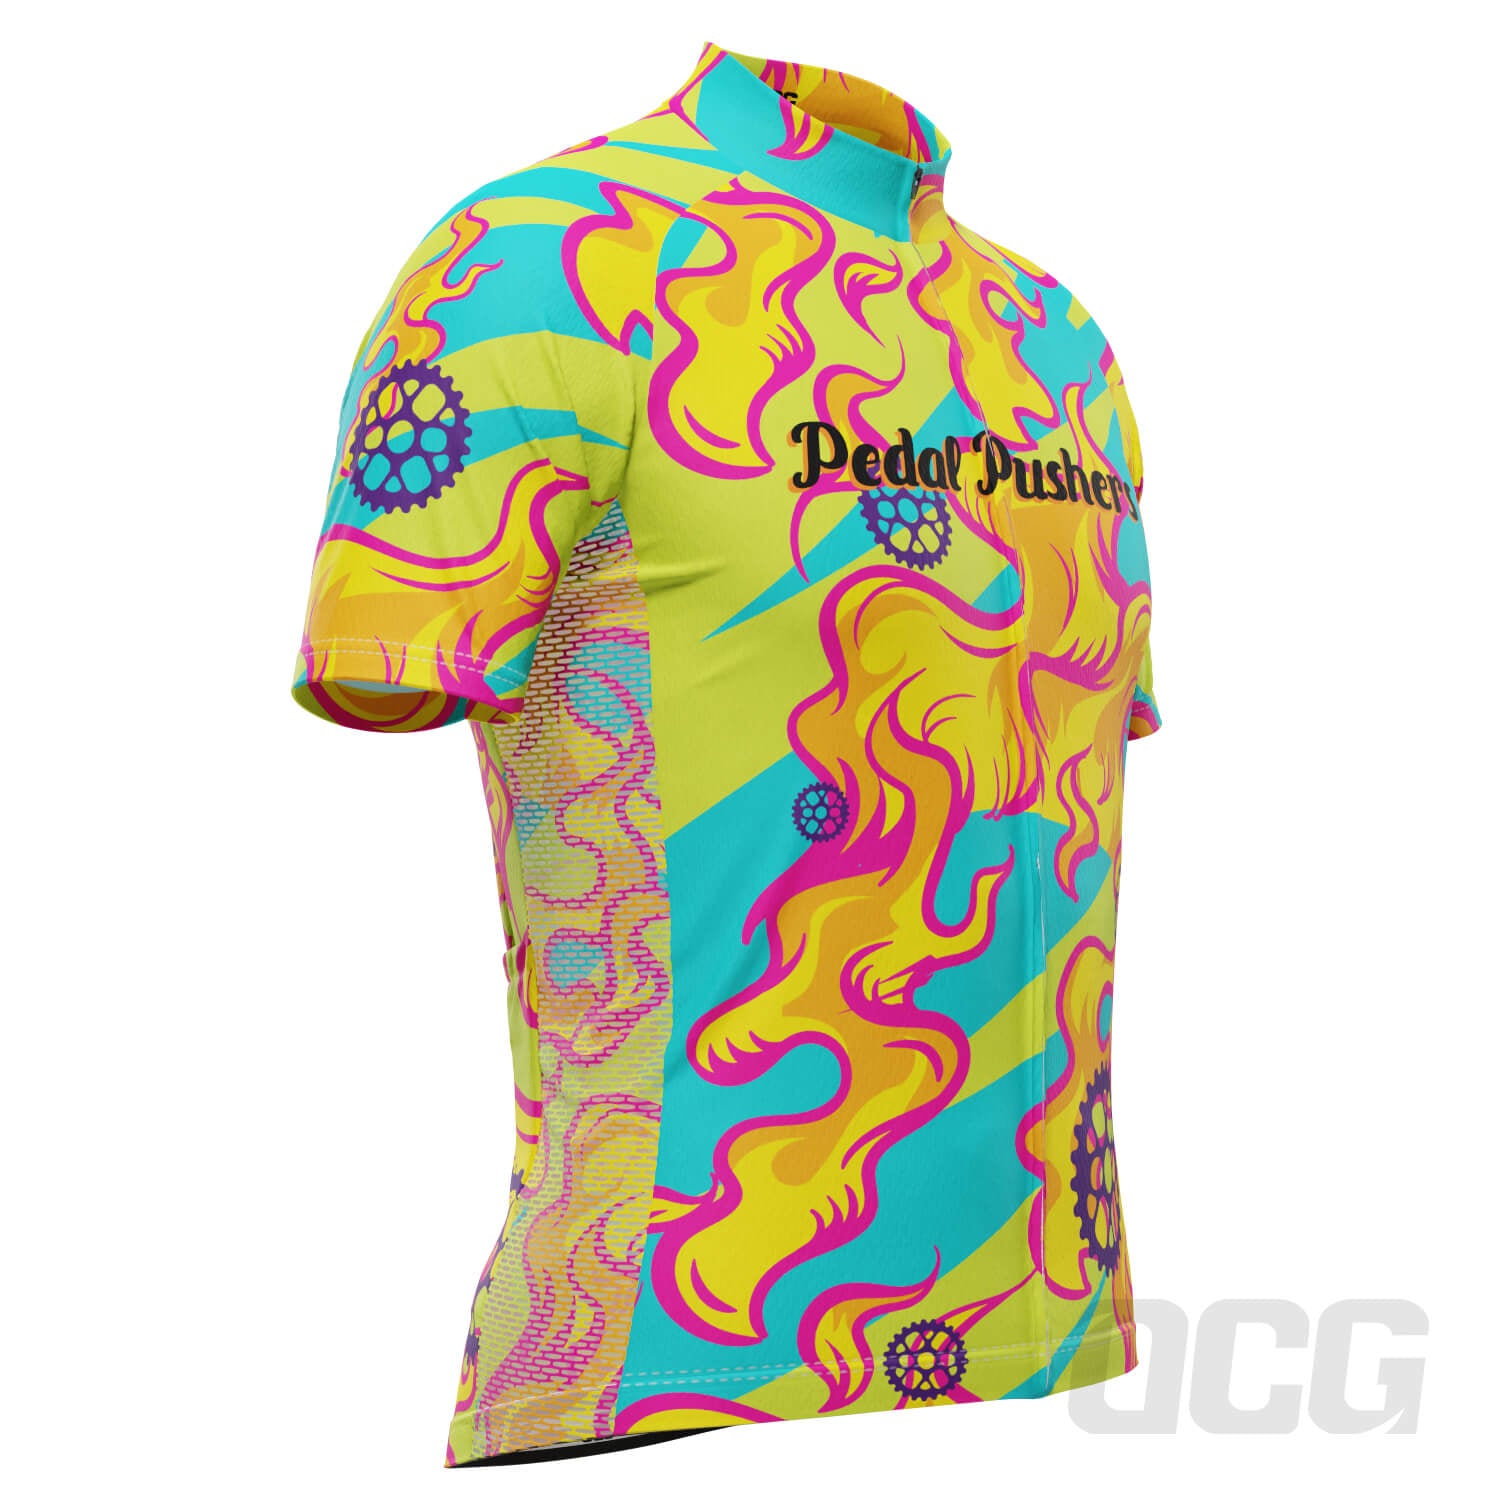 Men's Pedal Pushers Custom Team Design Short Sleeve Cycling Jersey